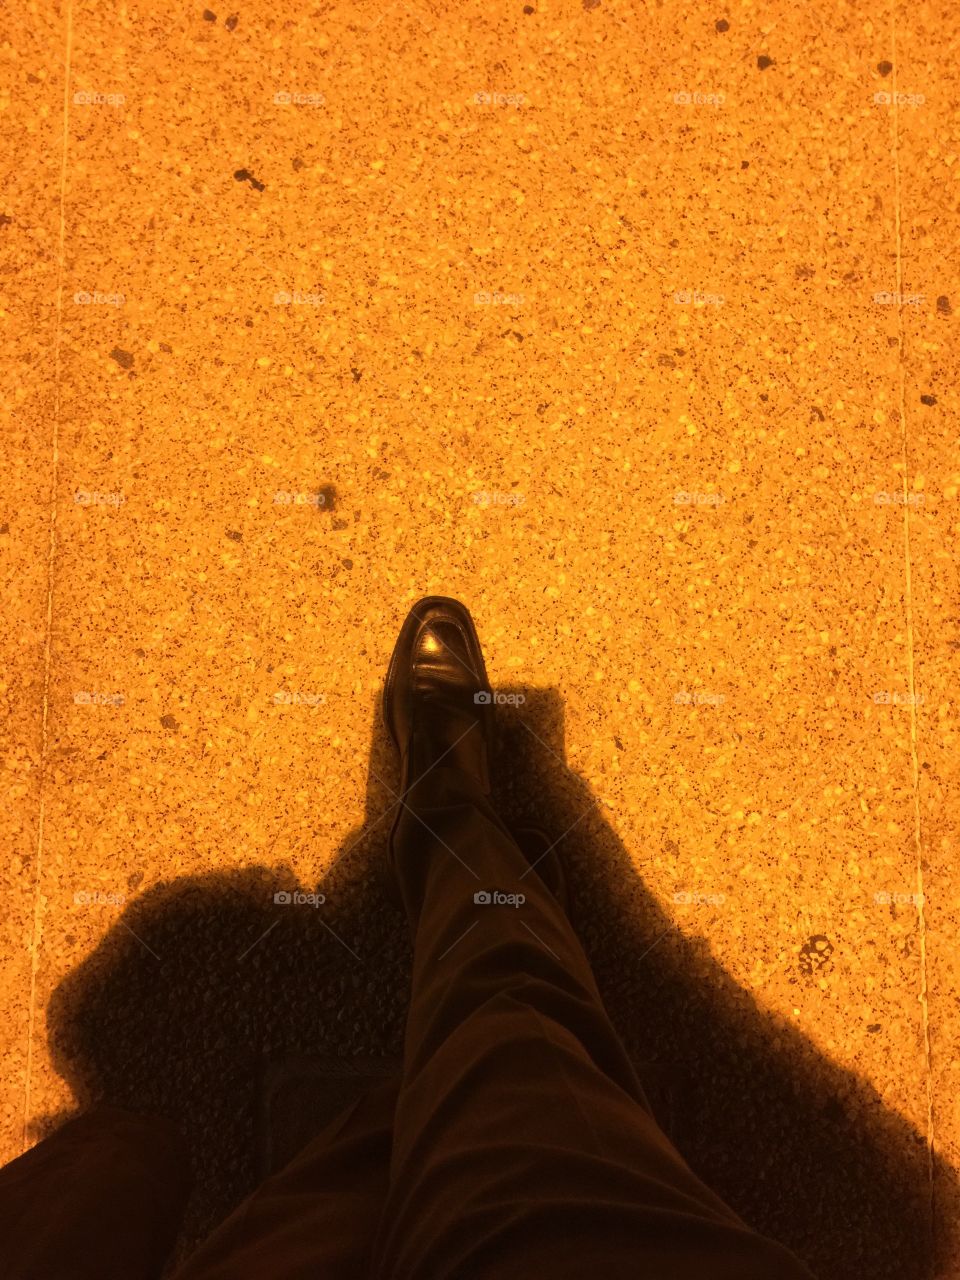 Shoe shadow 